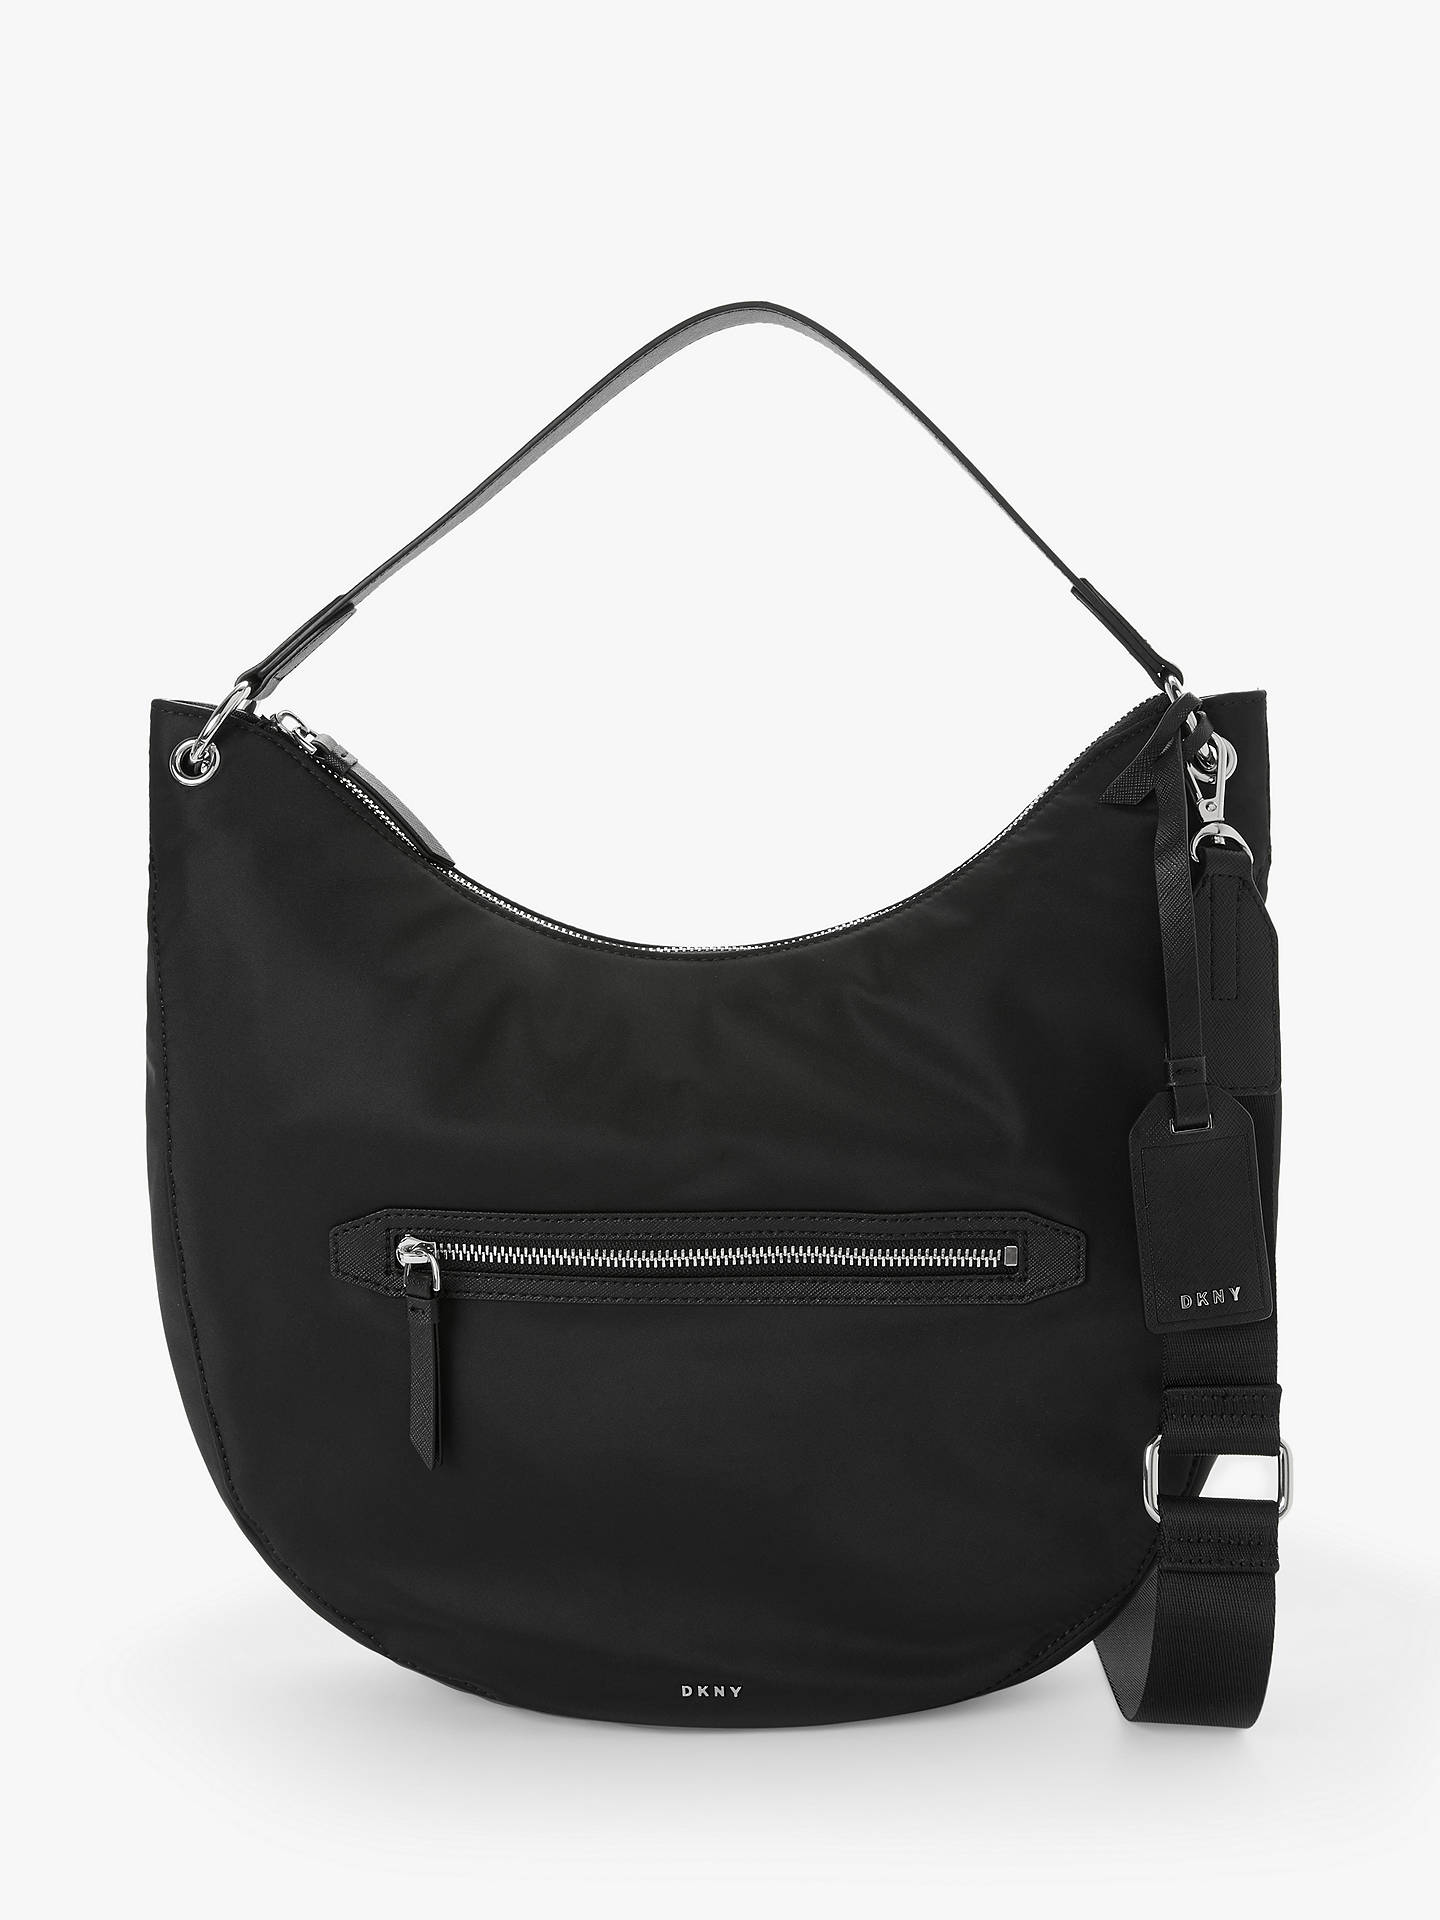 DKNY Casey Zip Top Hobo Bag, Black/Silver at John Lewis & Partners